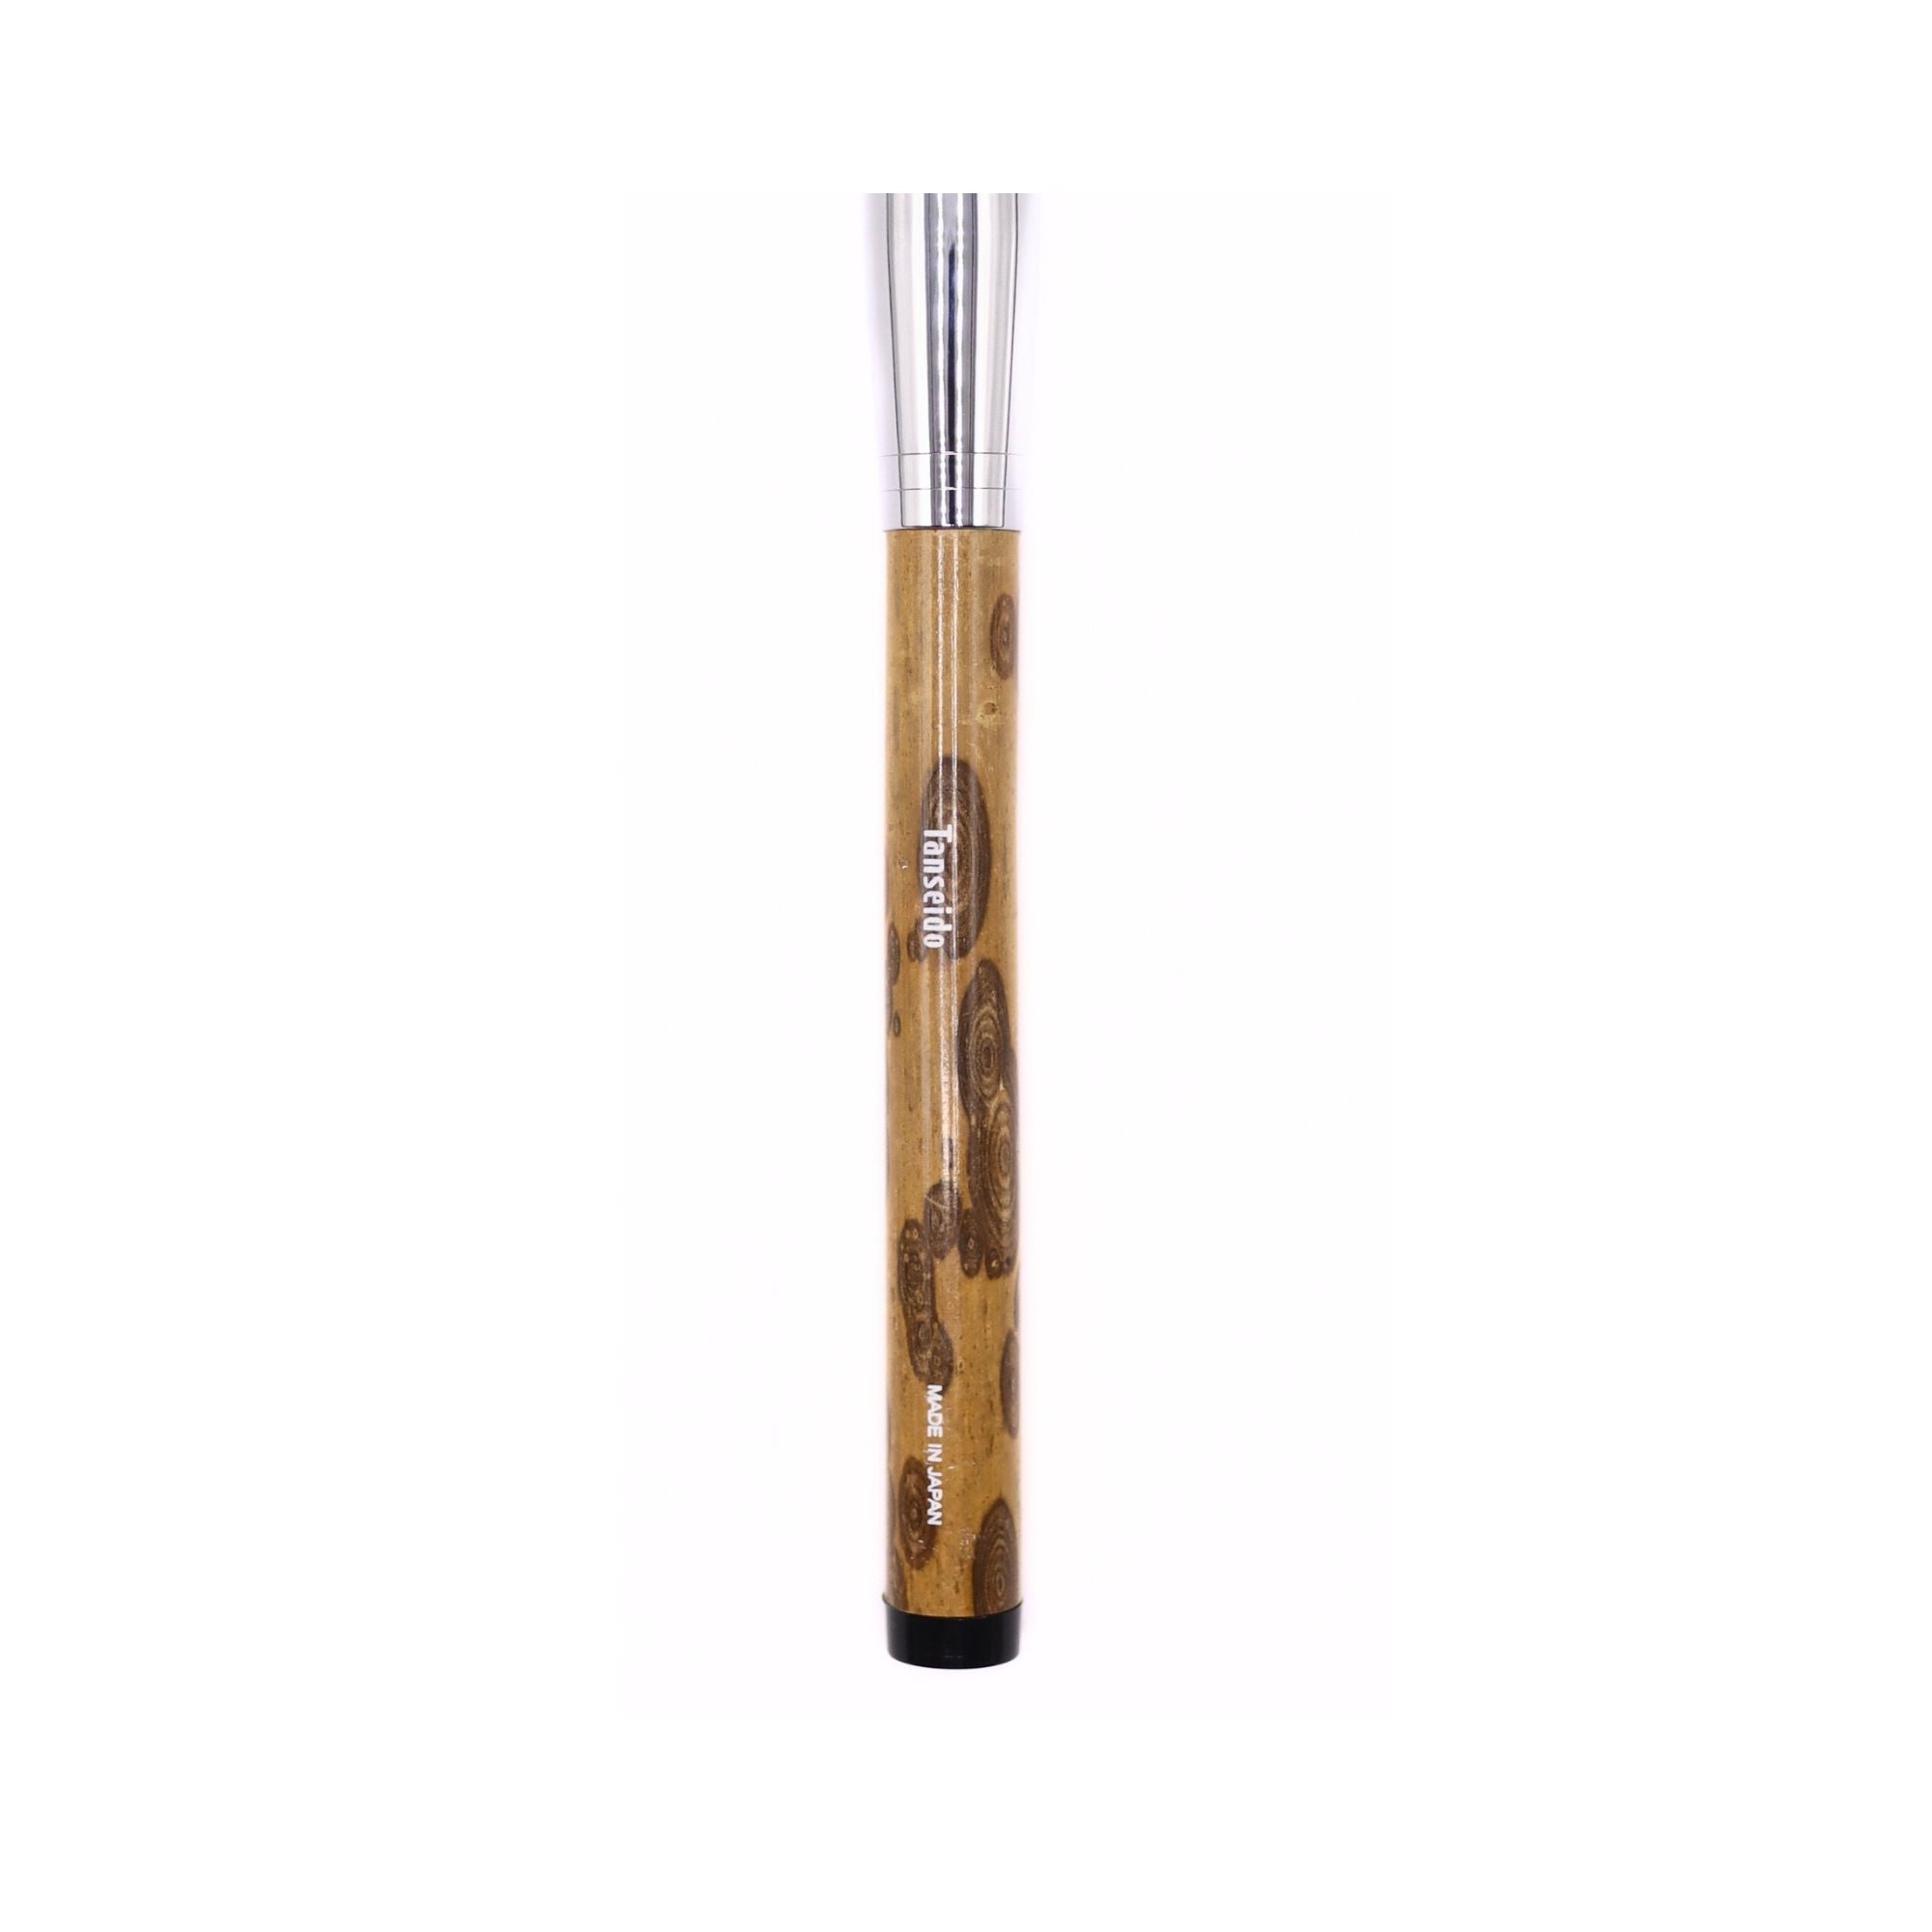 Tanseido Flat Cheek Brush, Take 竹 'Bamboo' Series (AQ20TAKE) - Fude Beauty, Japanese Makeup Brushes